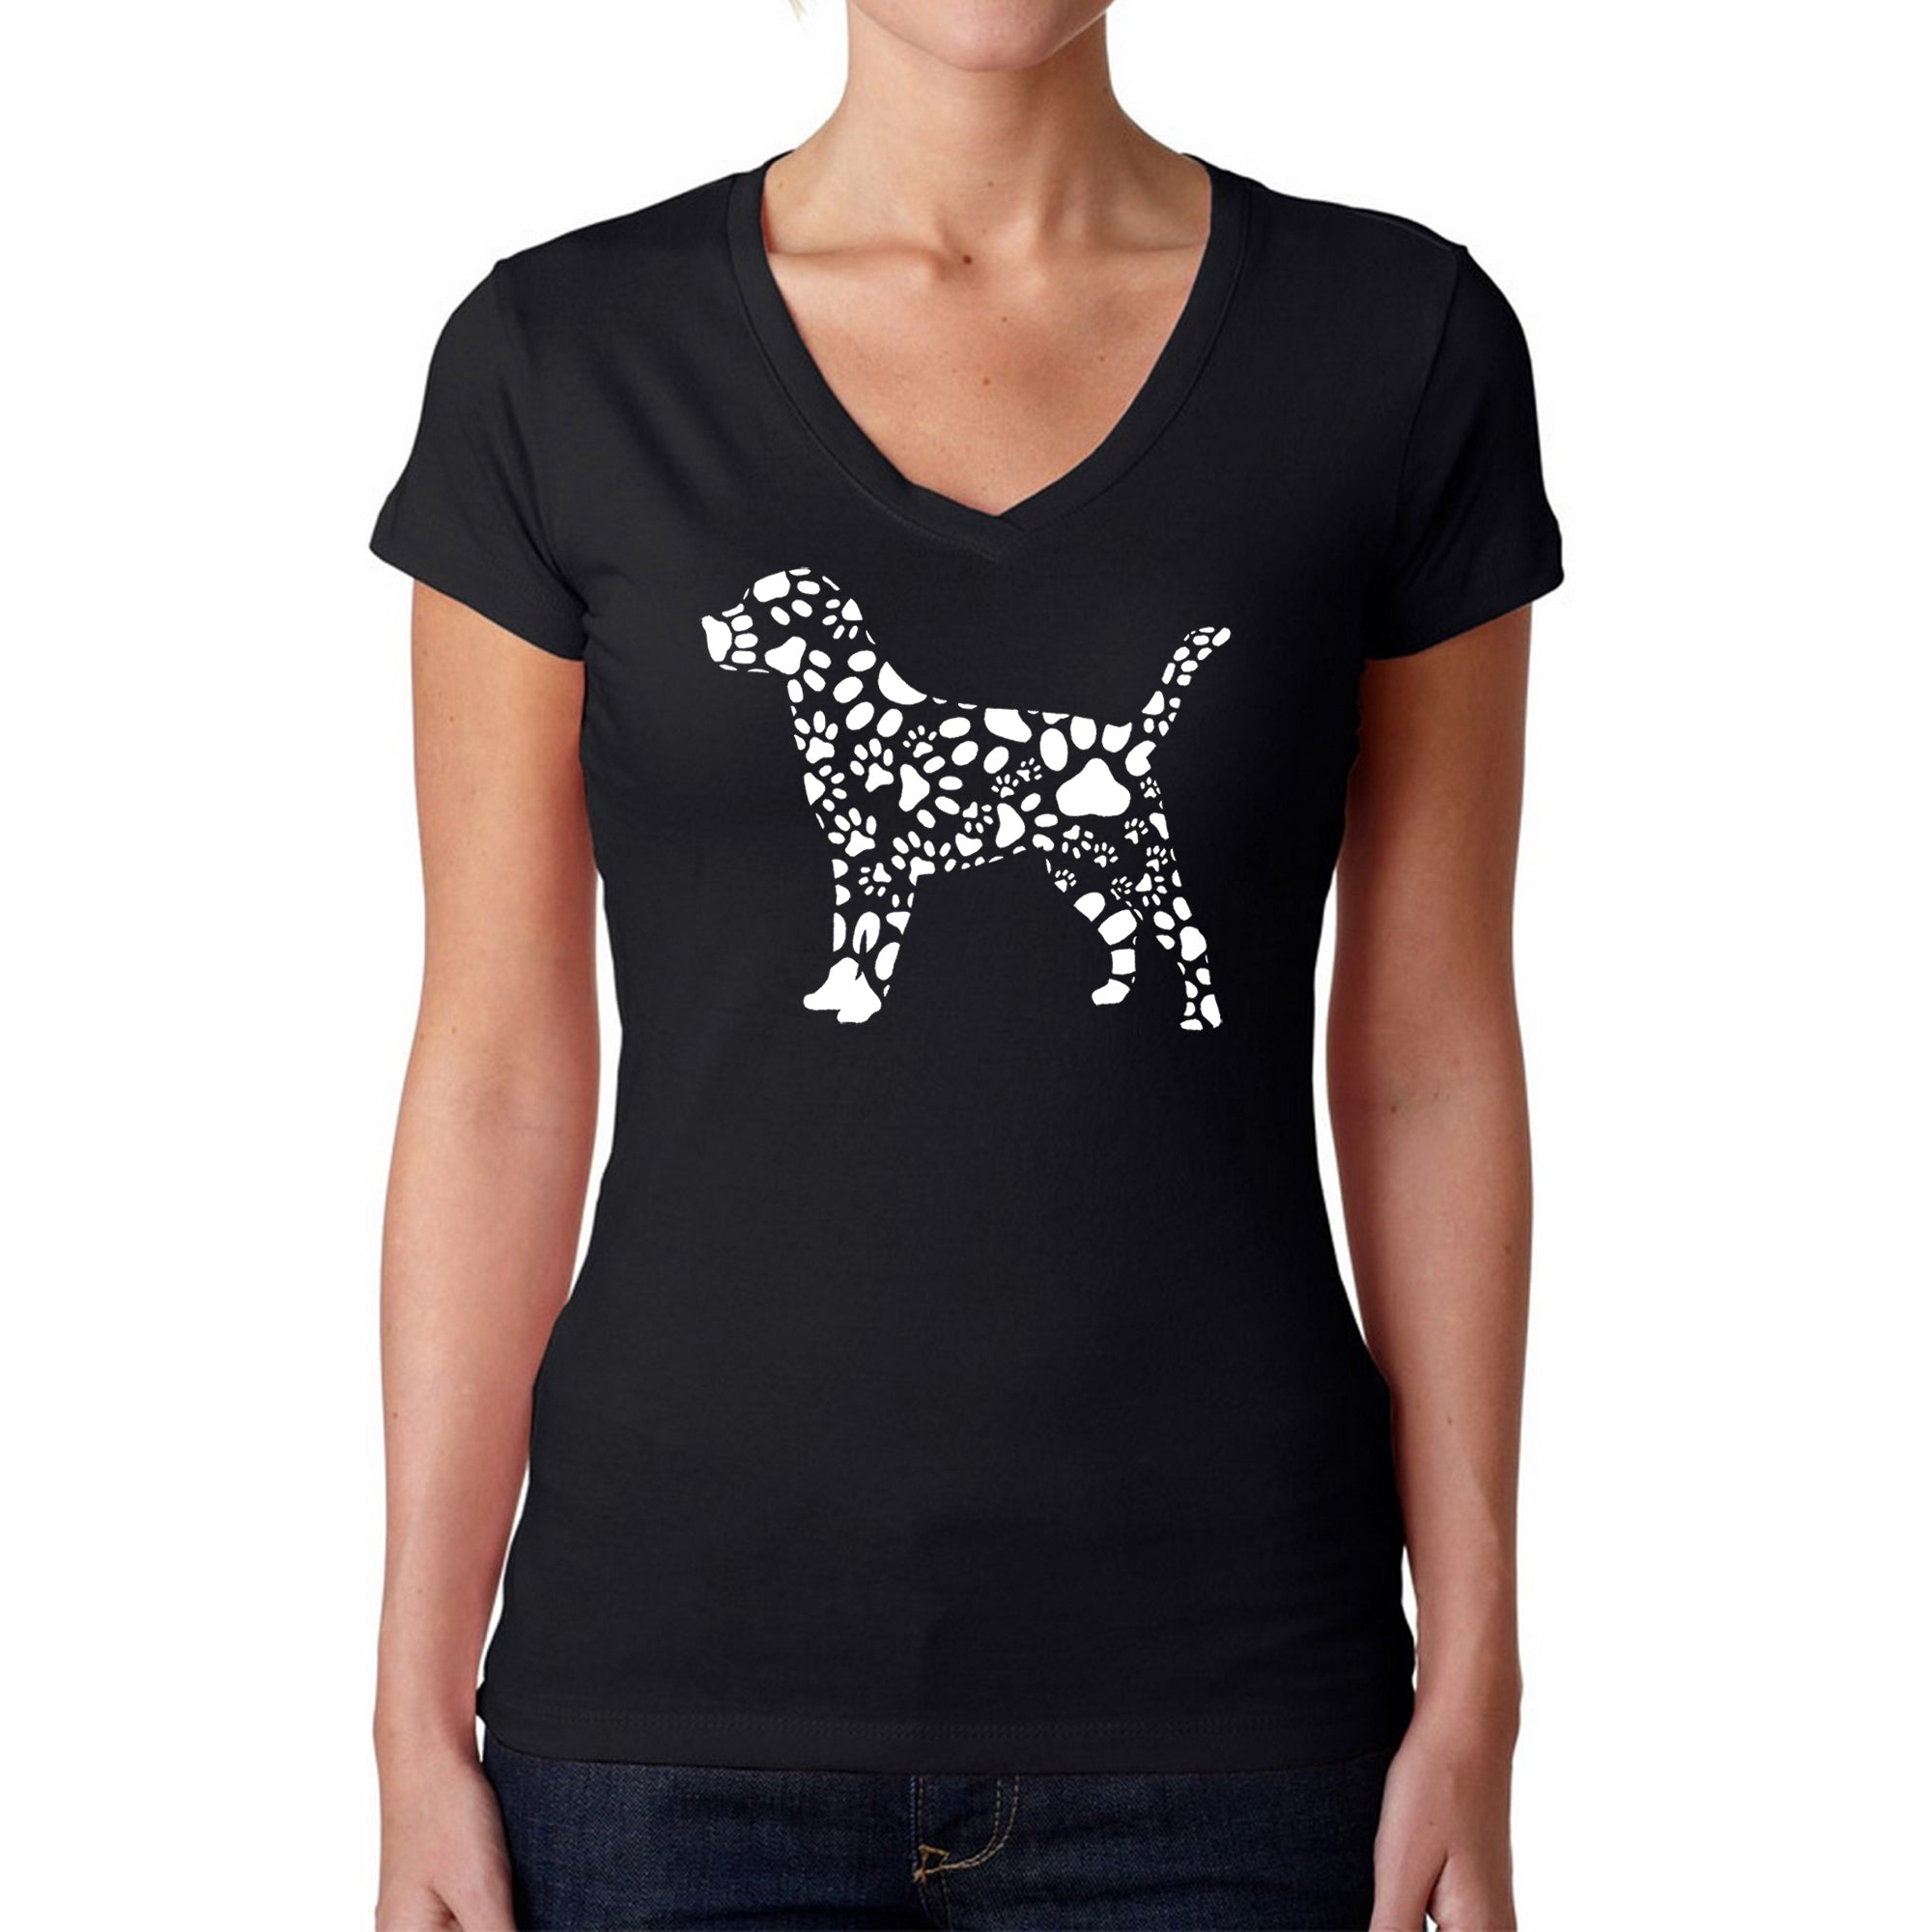 Dog Paw Prints - Women's Word Art V-Neck T-Shirt - Black - Large